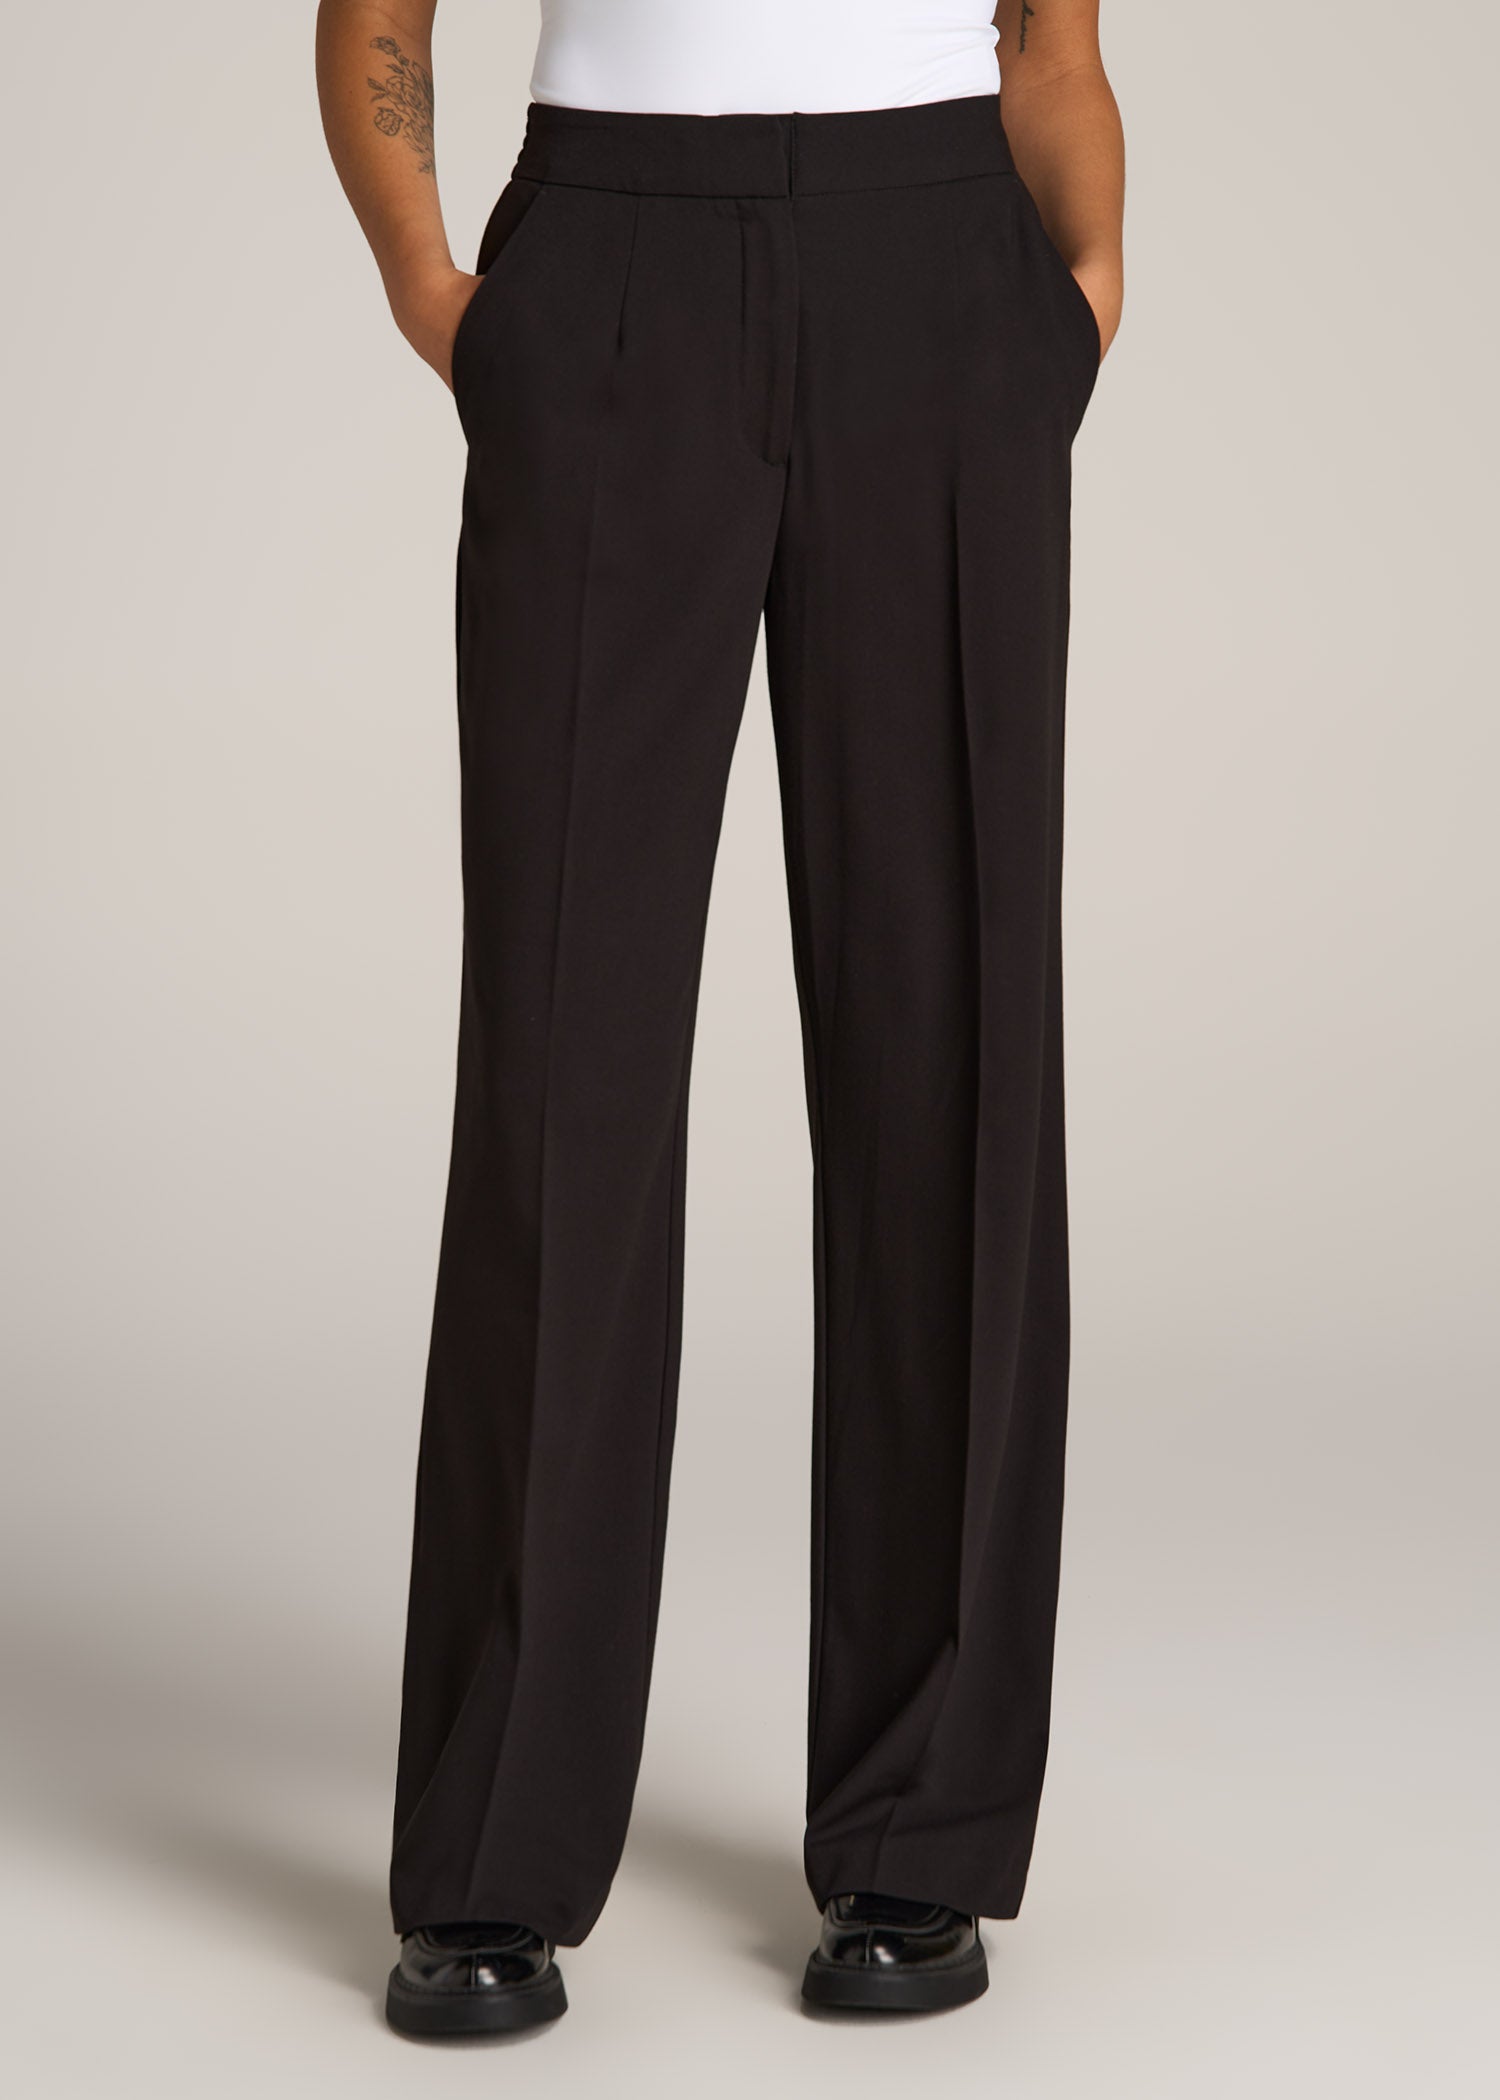 slacks plain black pants with 2 pocket s~2xl